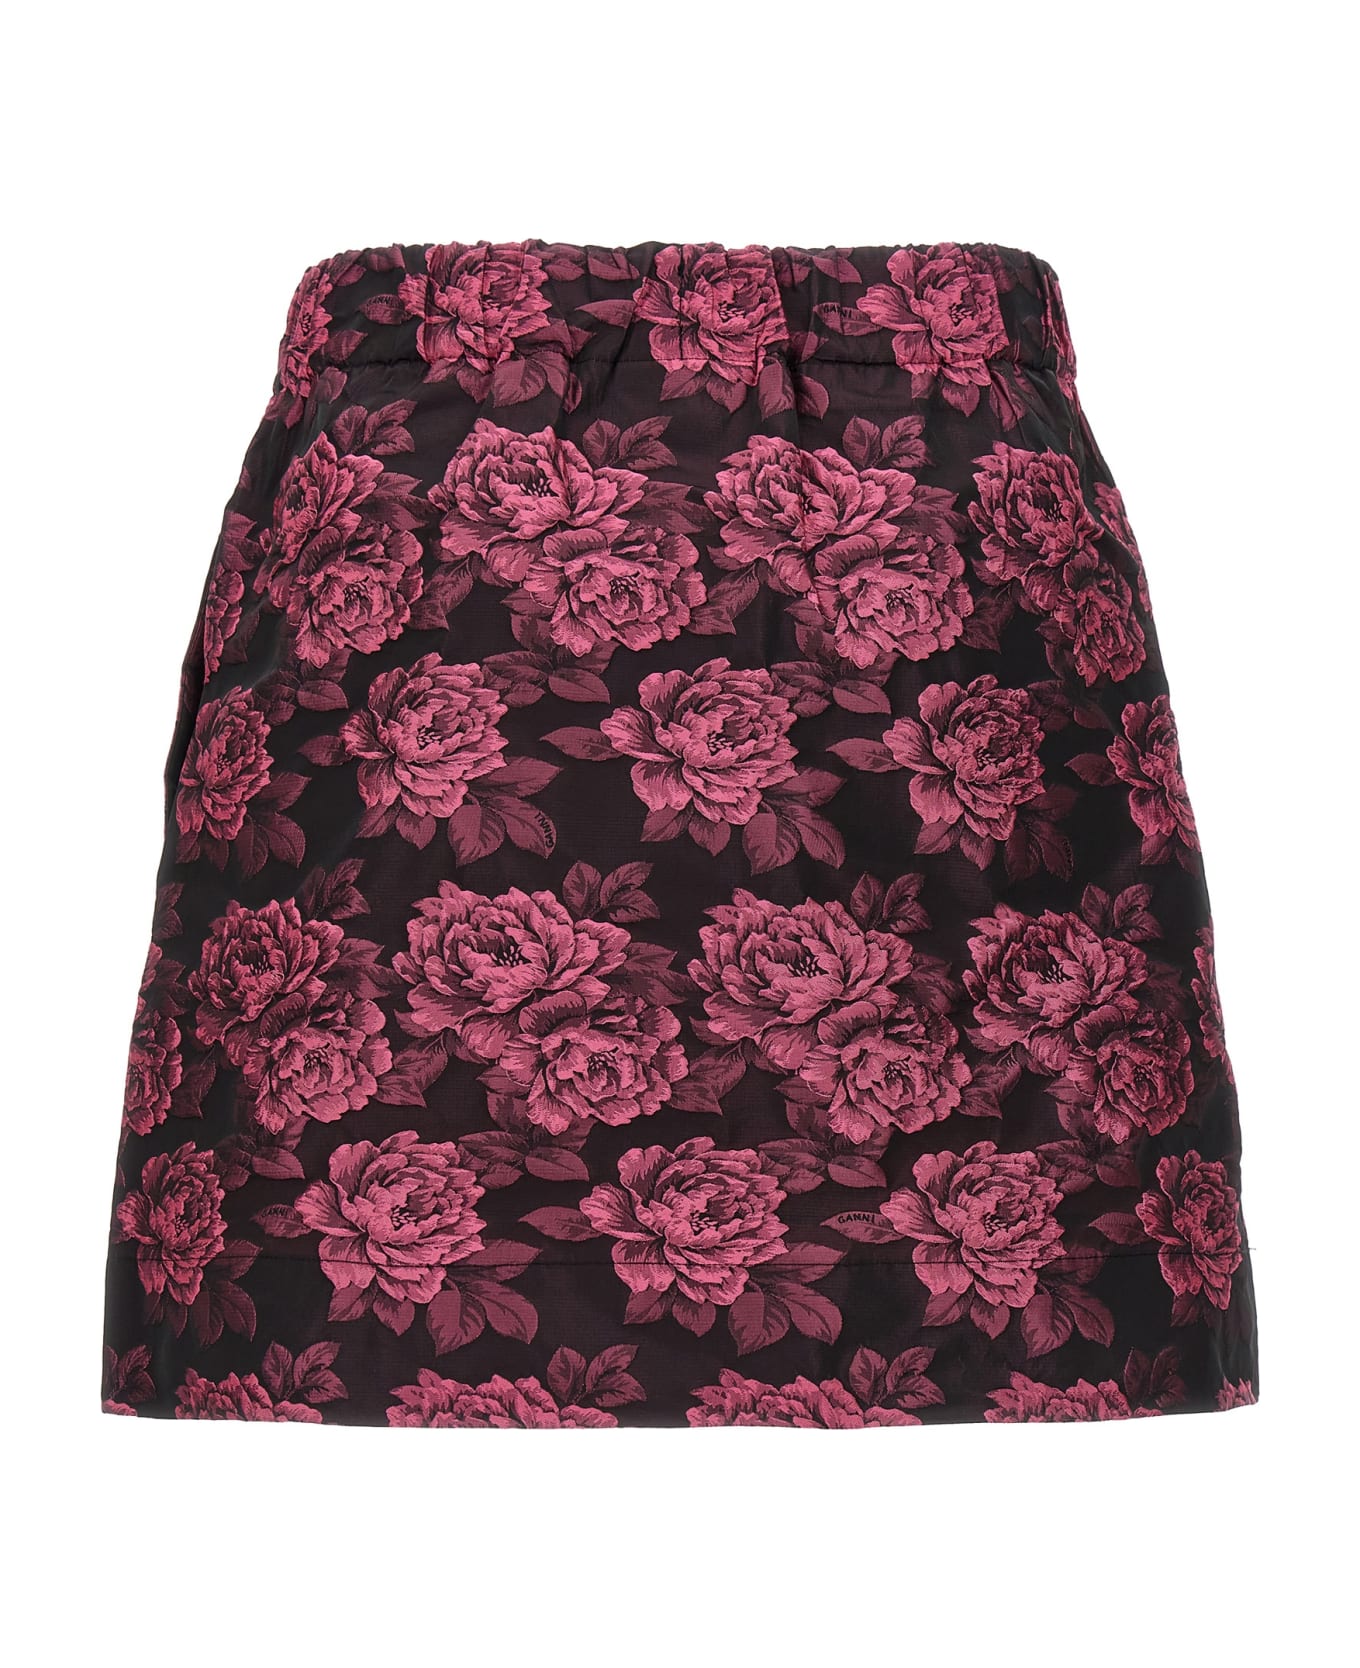 Ganni Floral Jacquard Skirt - Fuchsia スカート